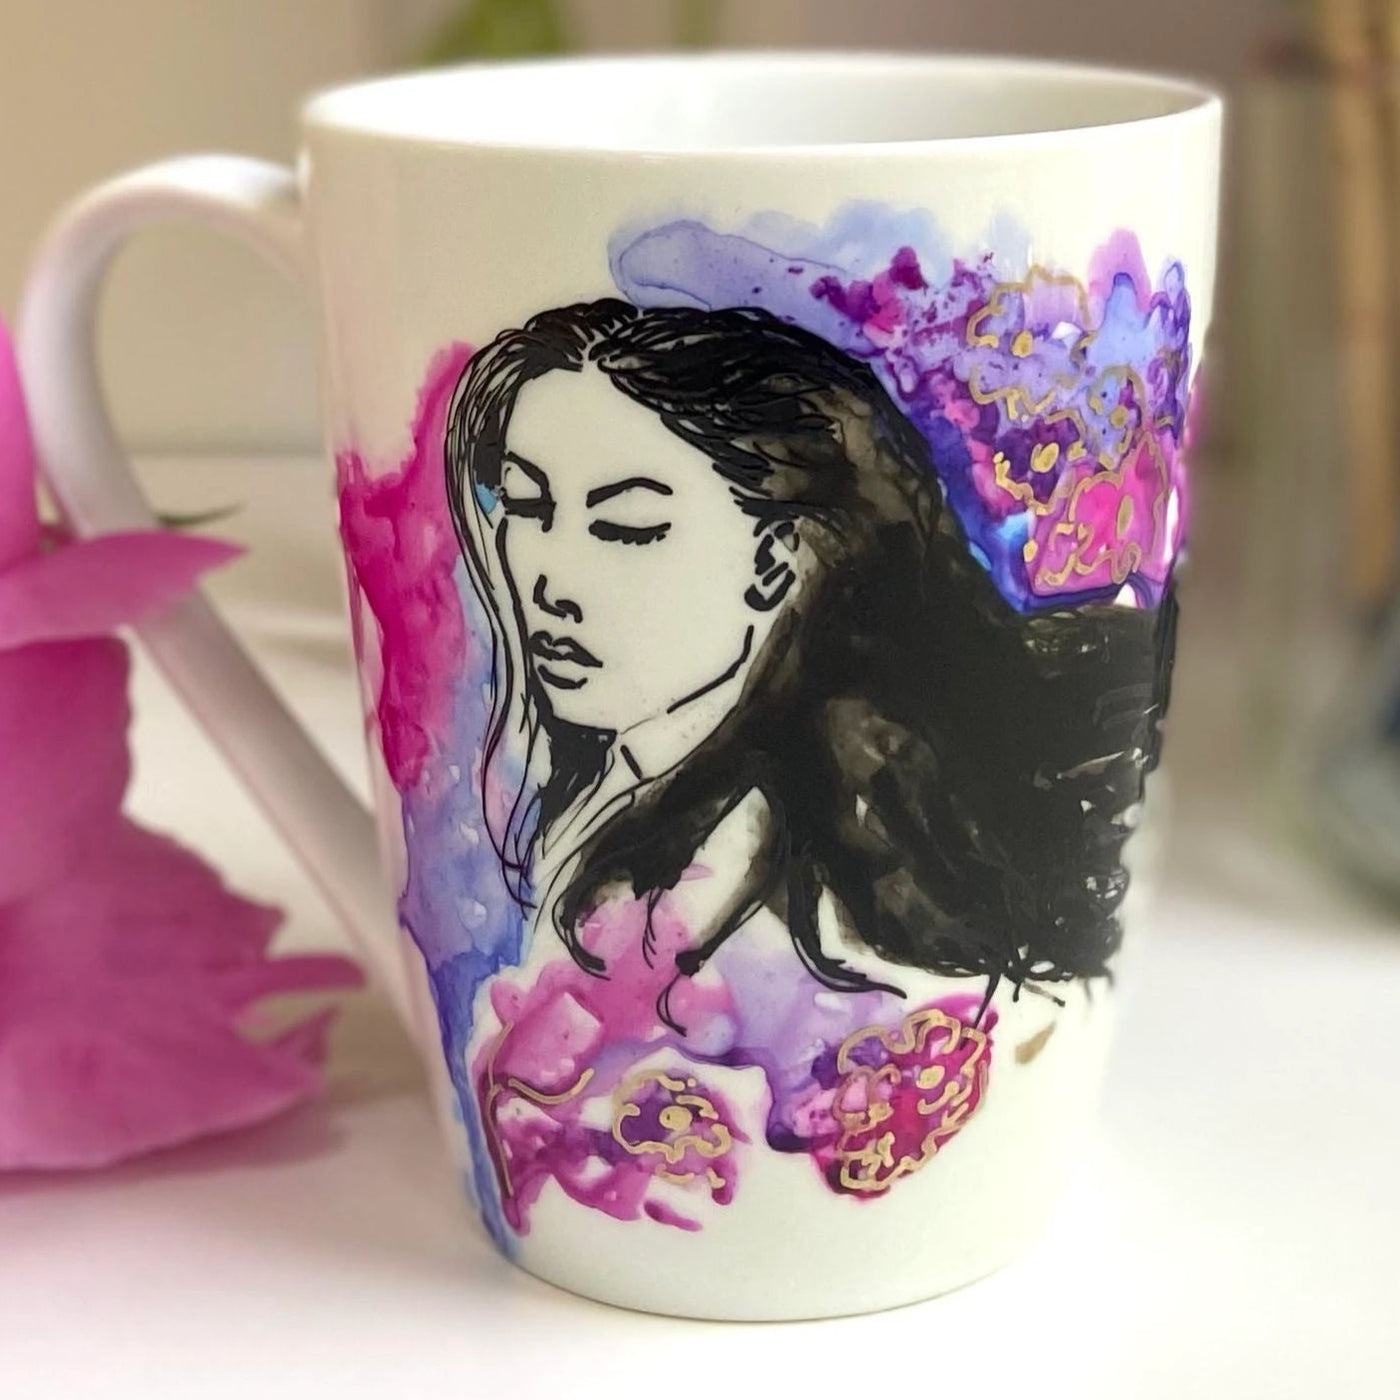 Floral storm mug by Laksh Sarkar Creations